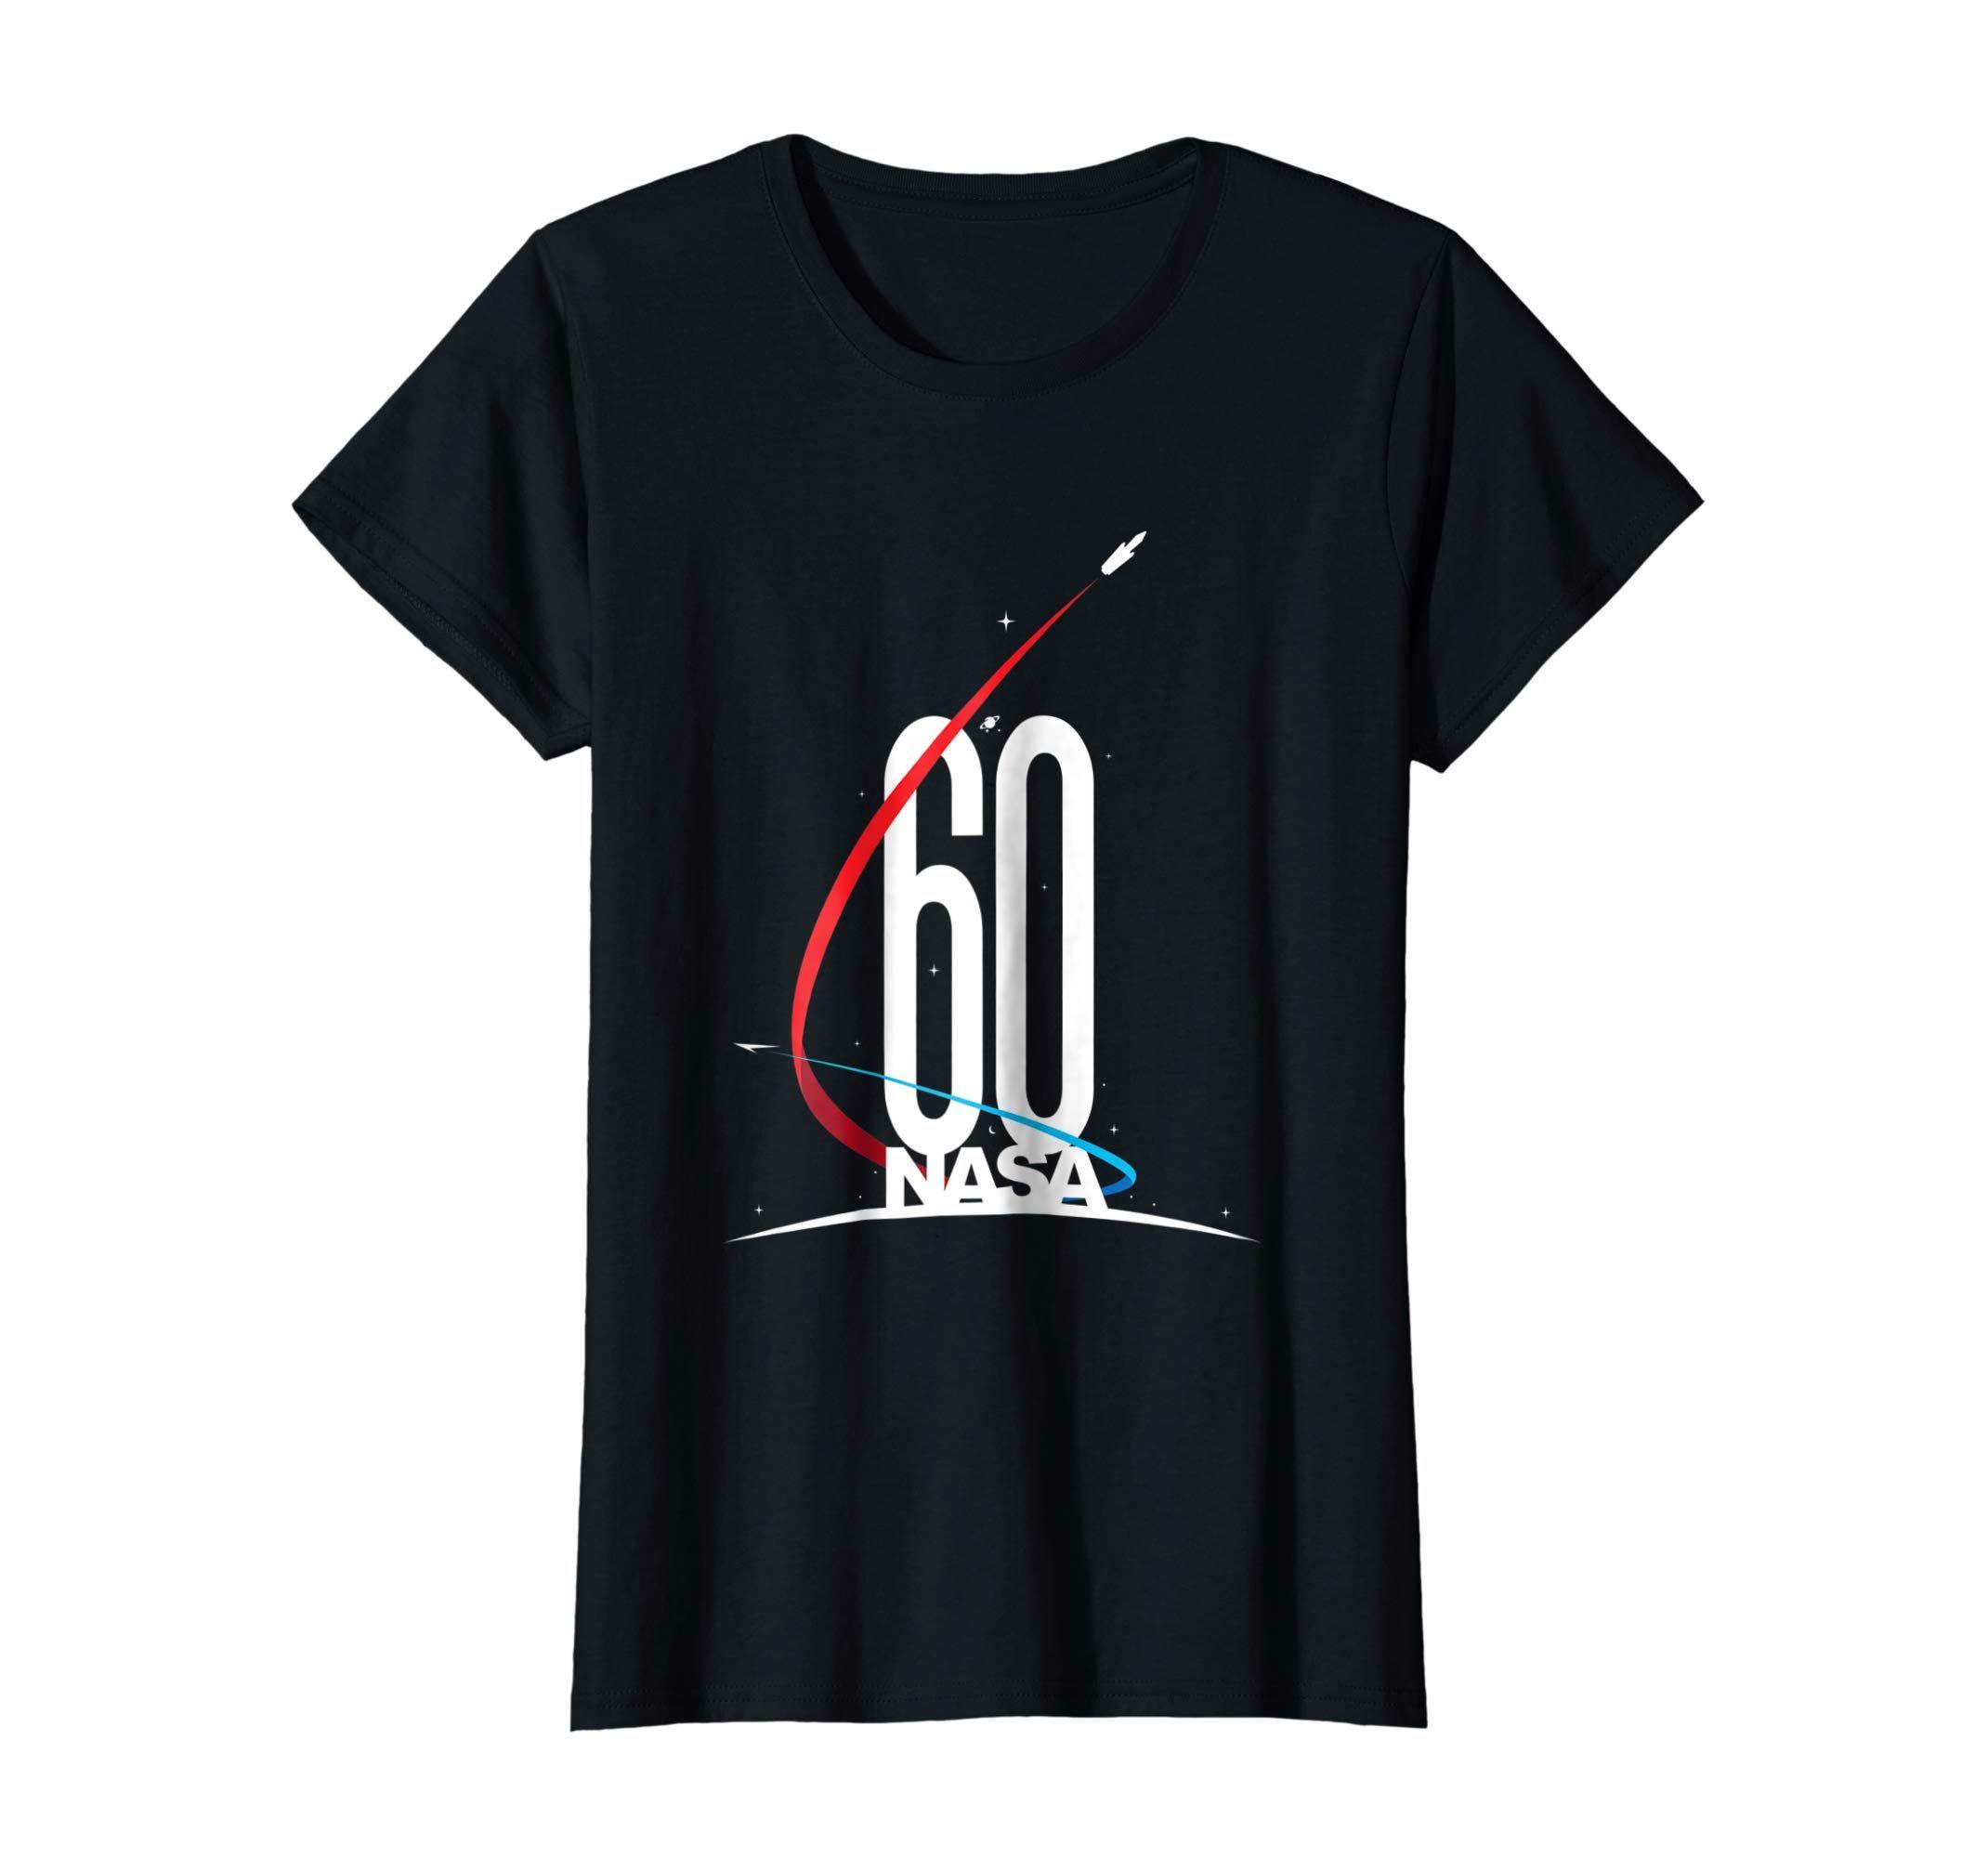 1st NASA Logo - Amazon.com: NASA 60th Anniversary Logo tshirt: Clothing